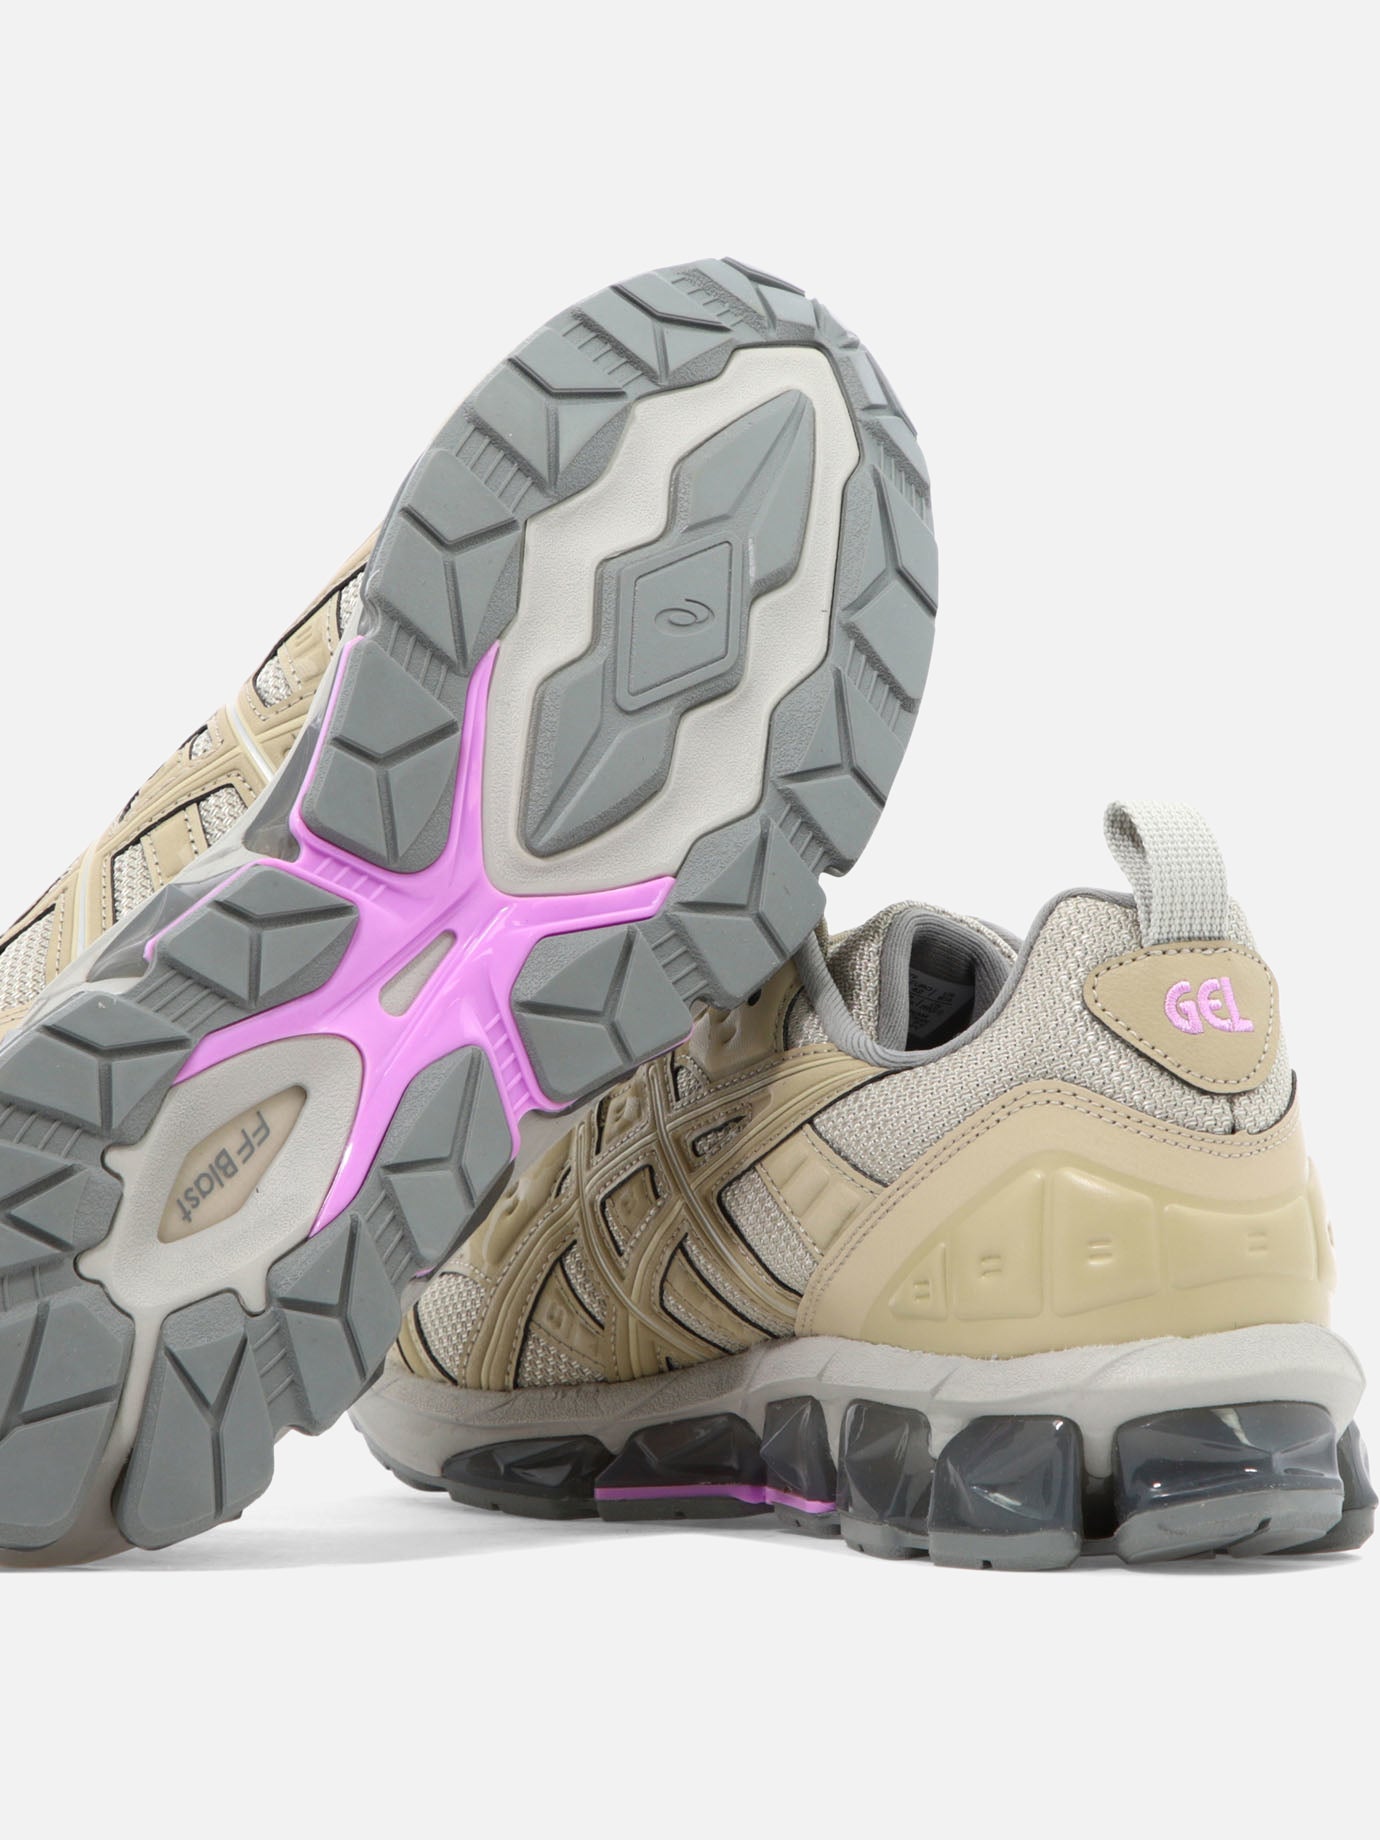 "Gel-Quantum 360 VII Kiso" sneakers